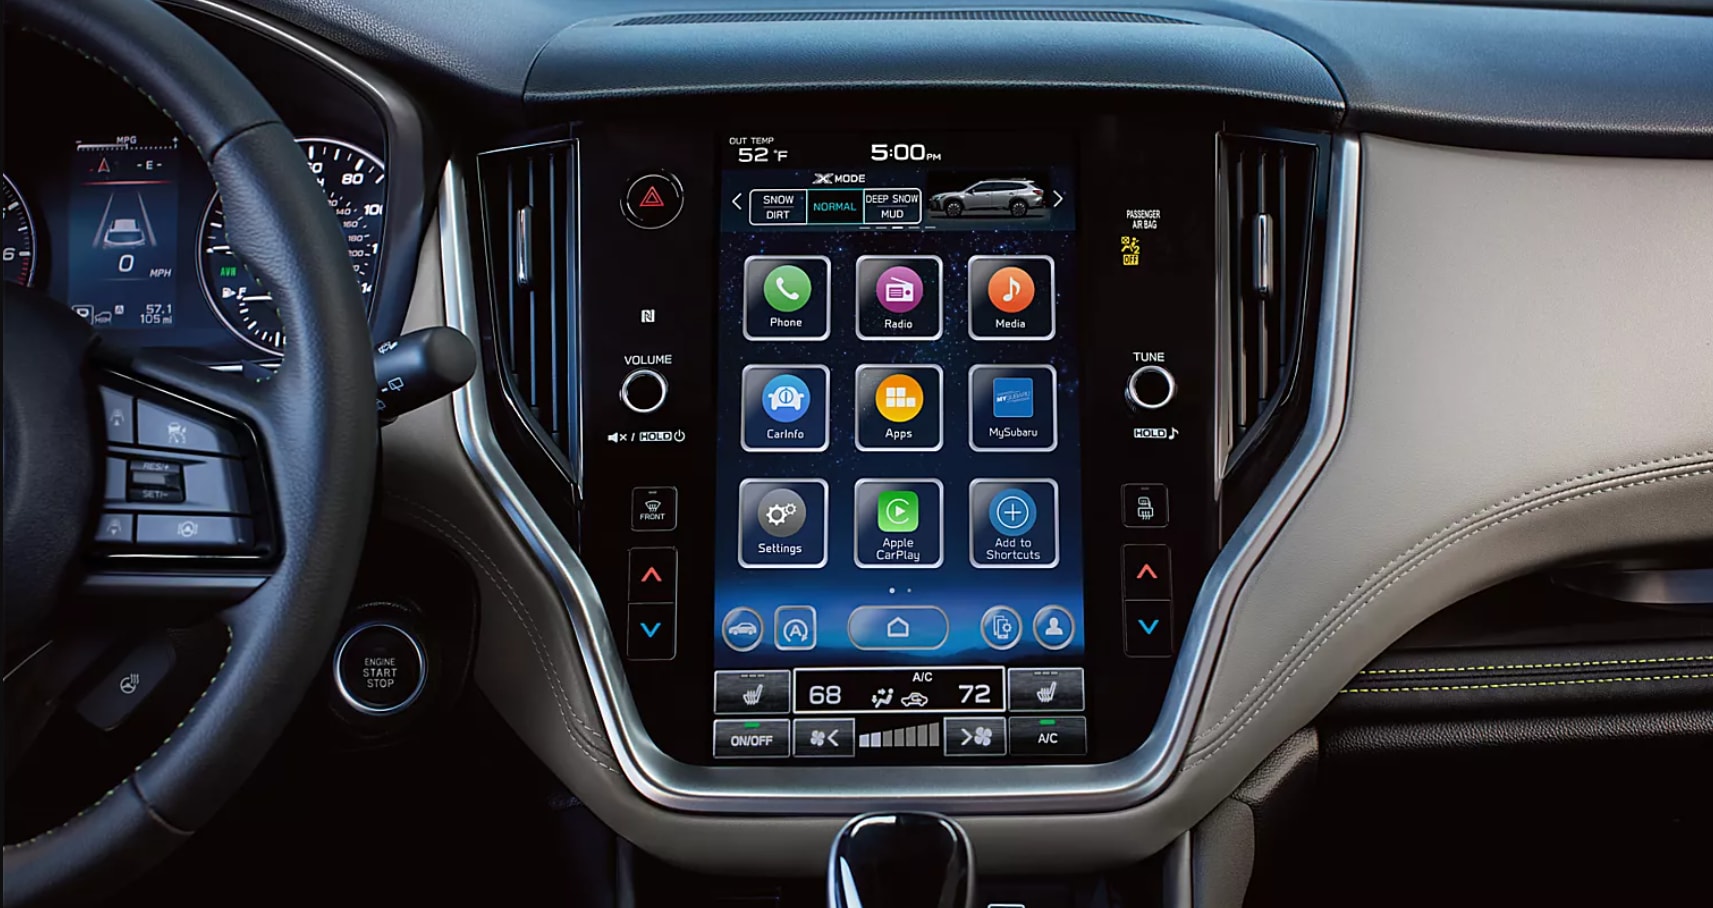 CarPlay 2.0 und das Apple Car: Das Auto im Fokus